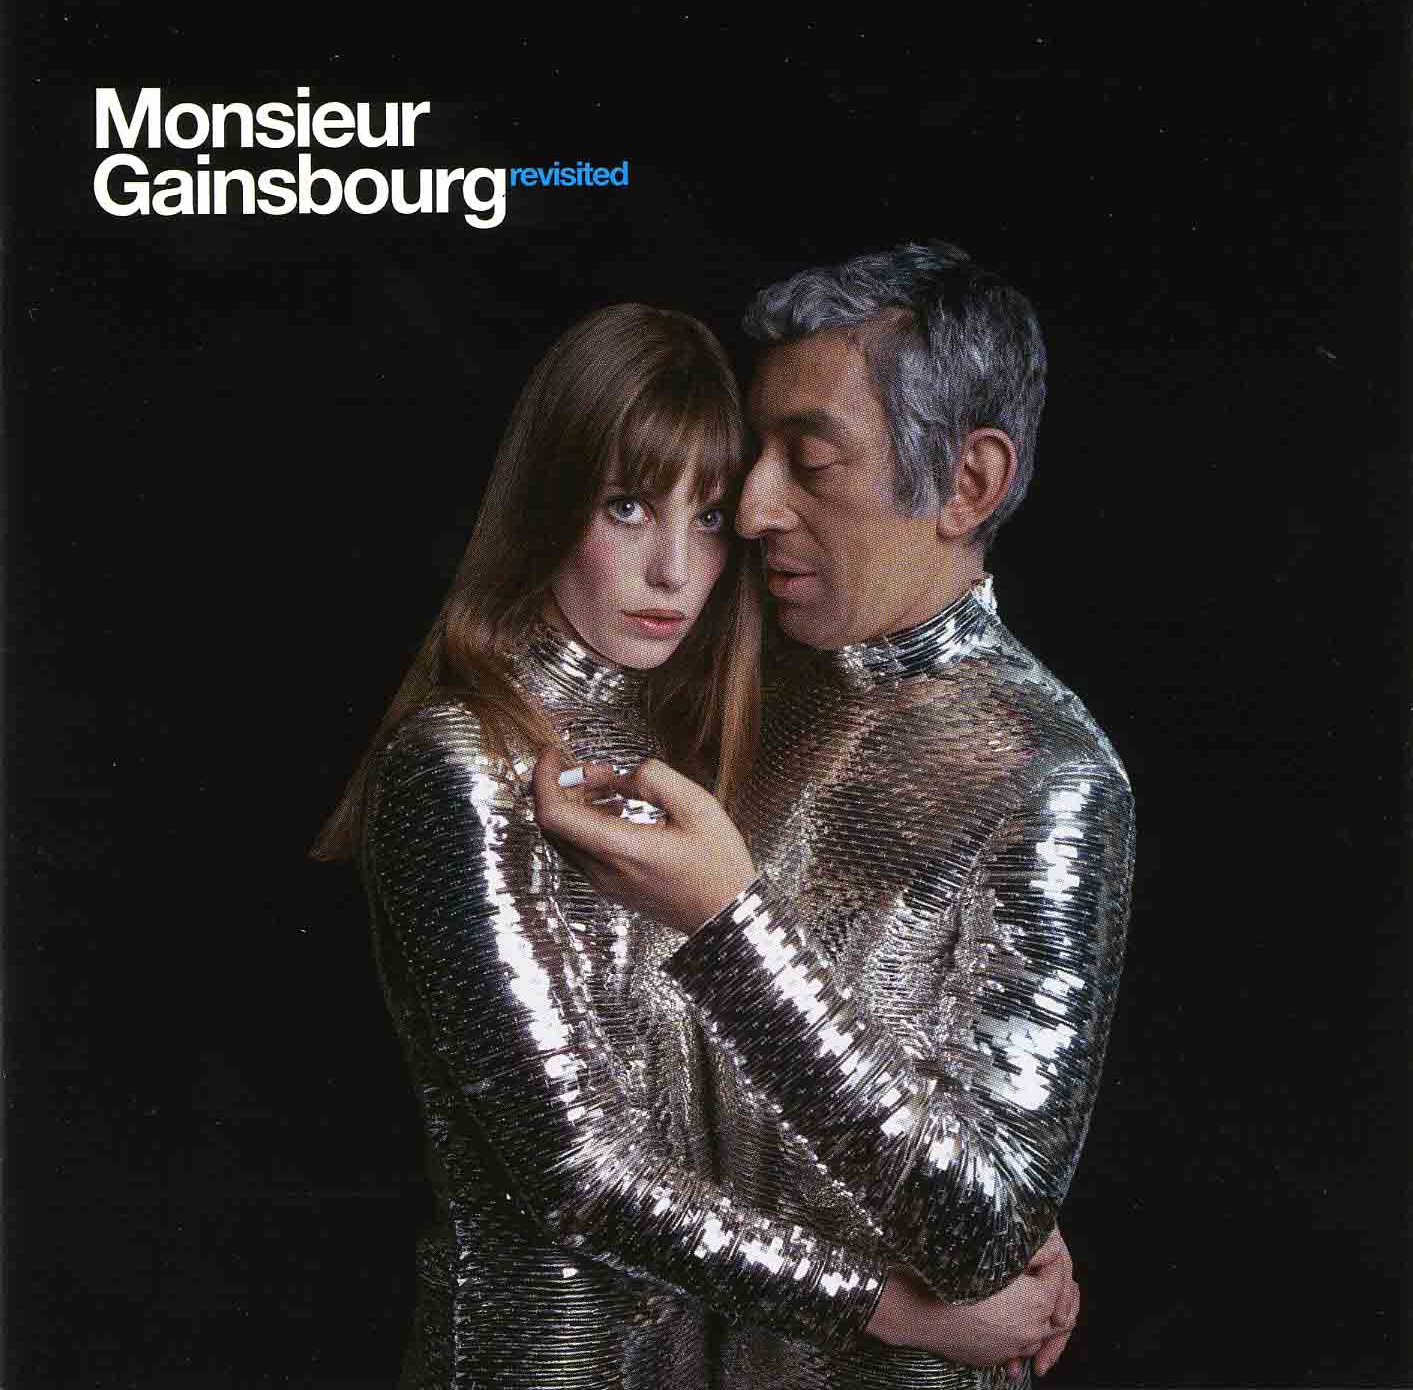 http://4.bp.blogspot.com/_b2g8xzu9jqY/TRNyKcwlqcI/AAAAAAAAAD0/Nryqf1rs1BA/s1600/A_Tribute_To_Serge_Gainsbourg_-_Monsieur_Gainsbourg_Revisited_-_Front.jpg